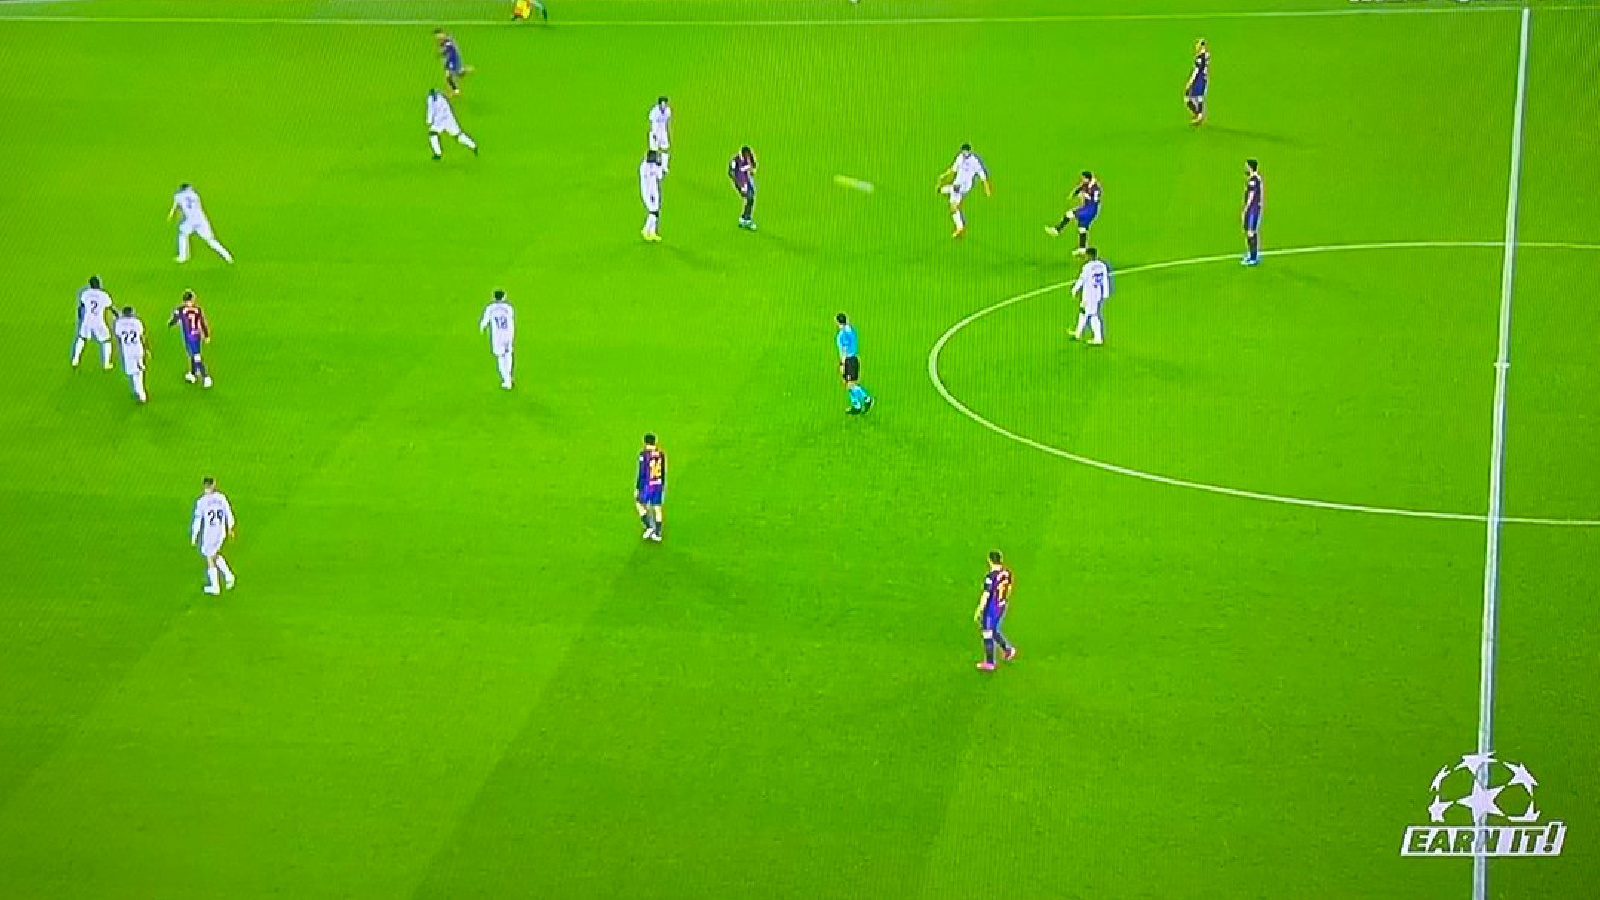 Image: La Liga stream matches with a ‘Earn It’ logo on bottom right corner